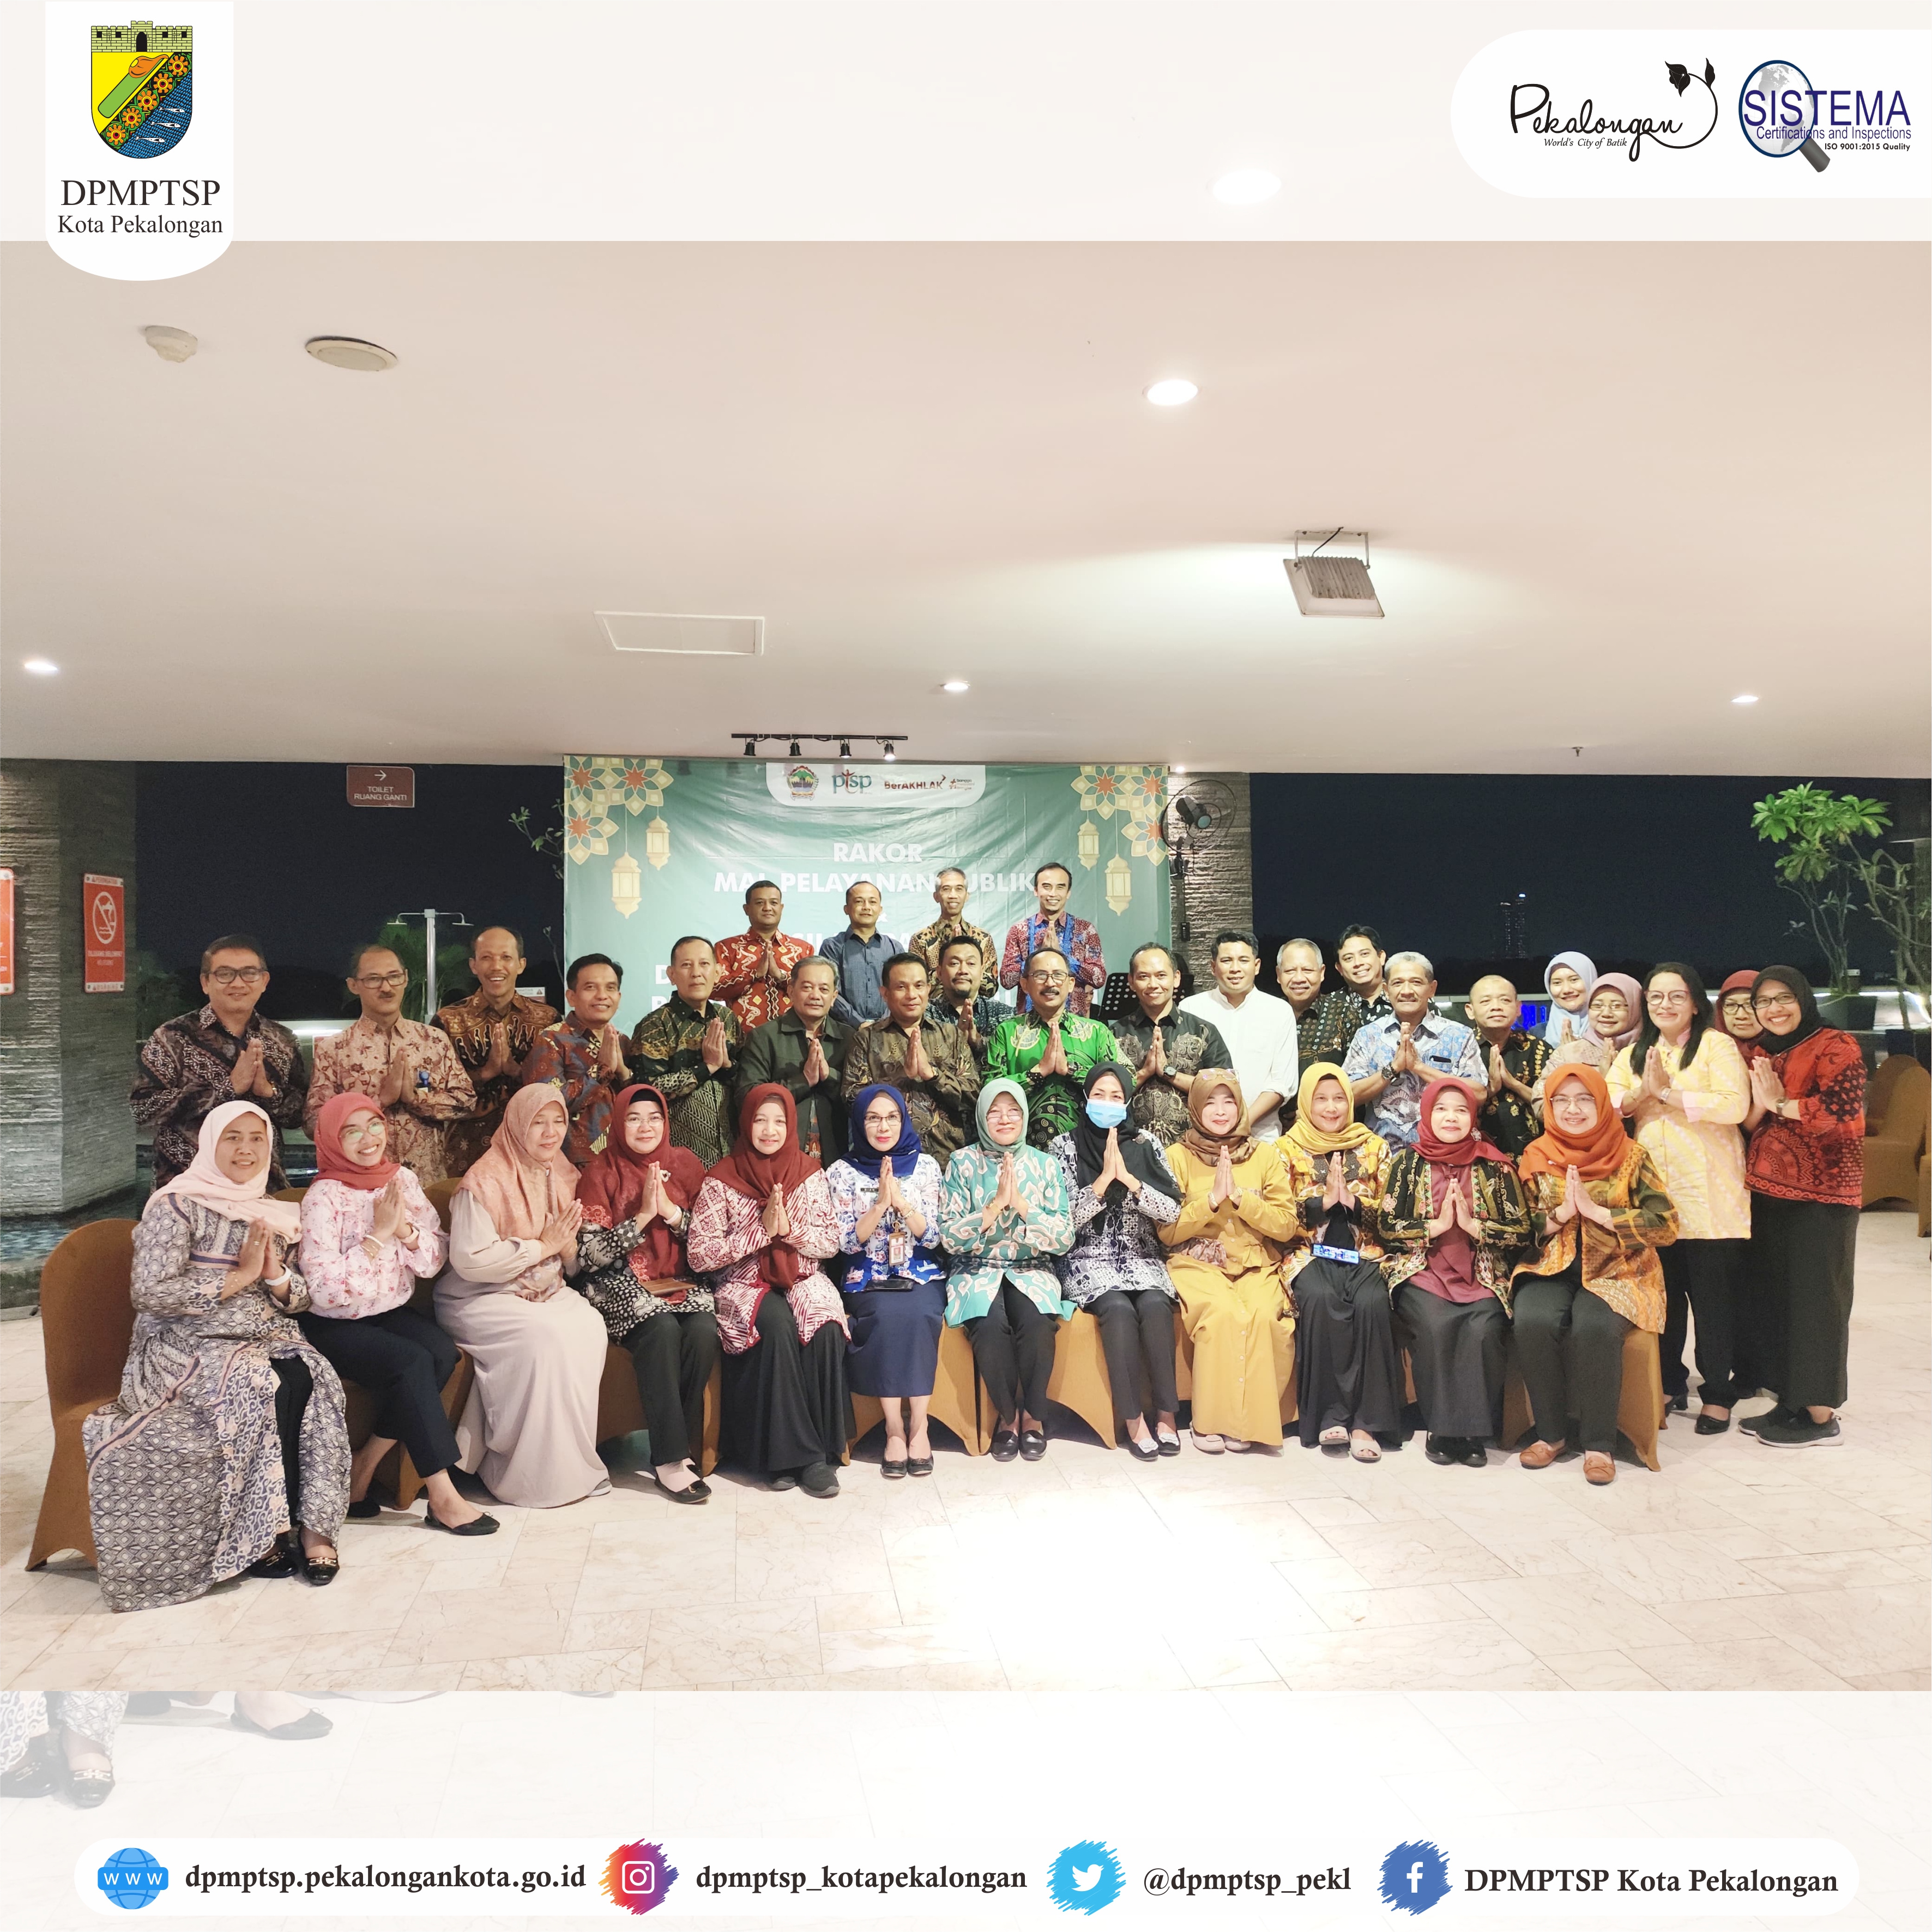 Rapat Koordinasi Mal Pelayanan Publik se-Provinsi Jawa Tengah